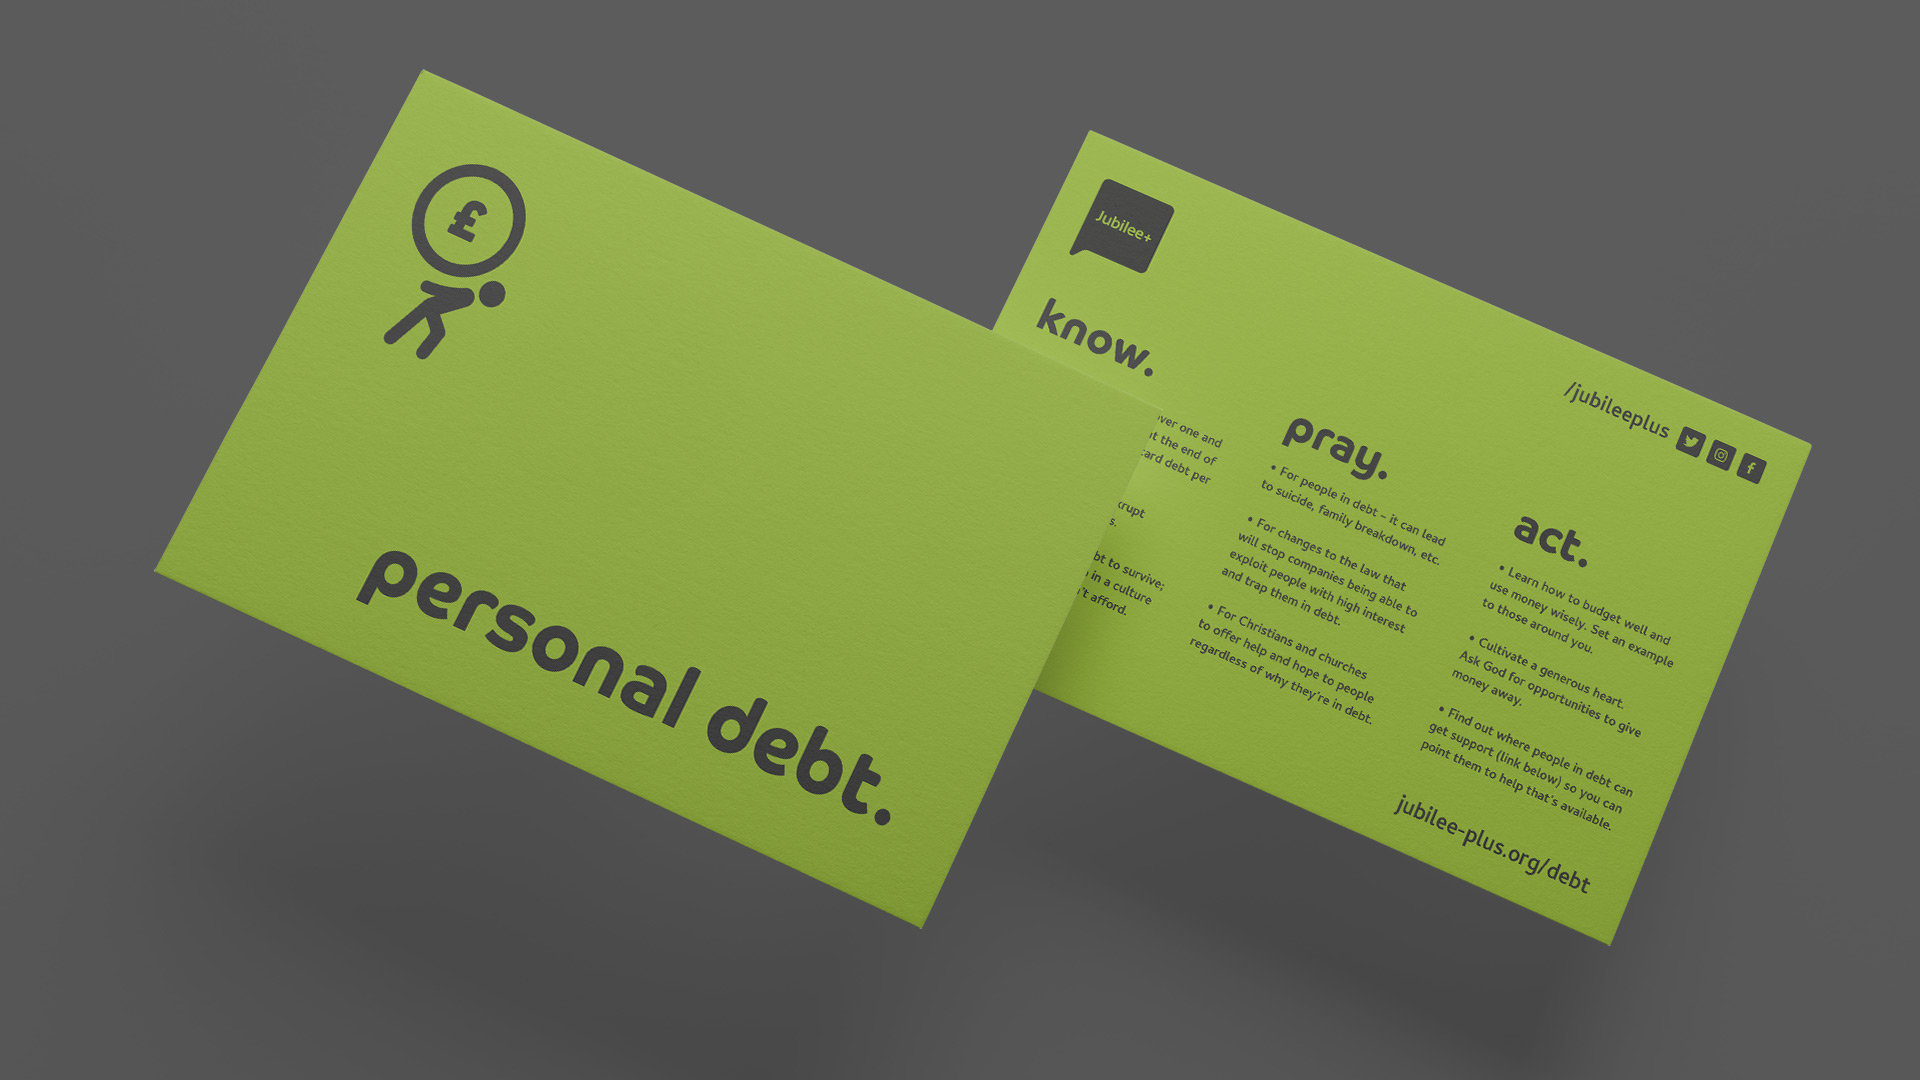 Jubilee+ Personal Debt information card